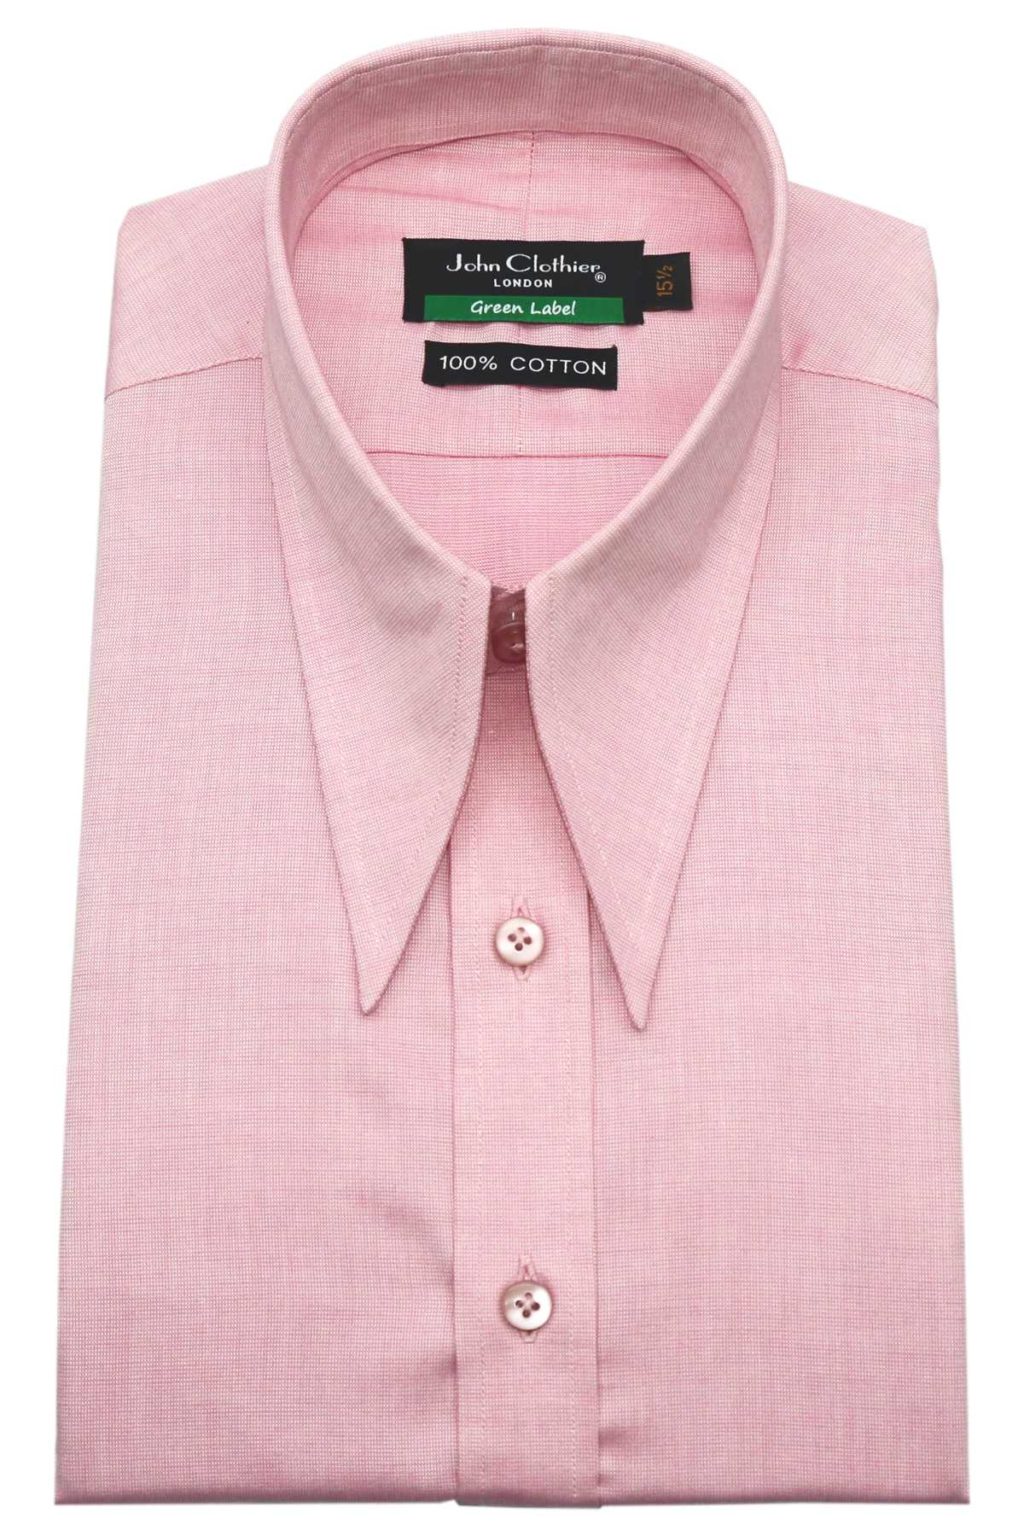 Pink Spearpoint Collar Shirt - John Clothier London Online